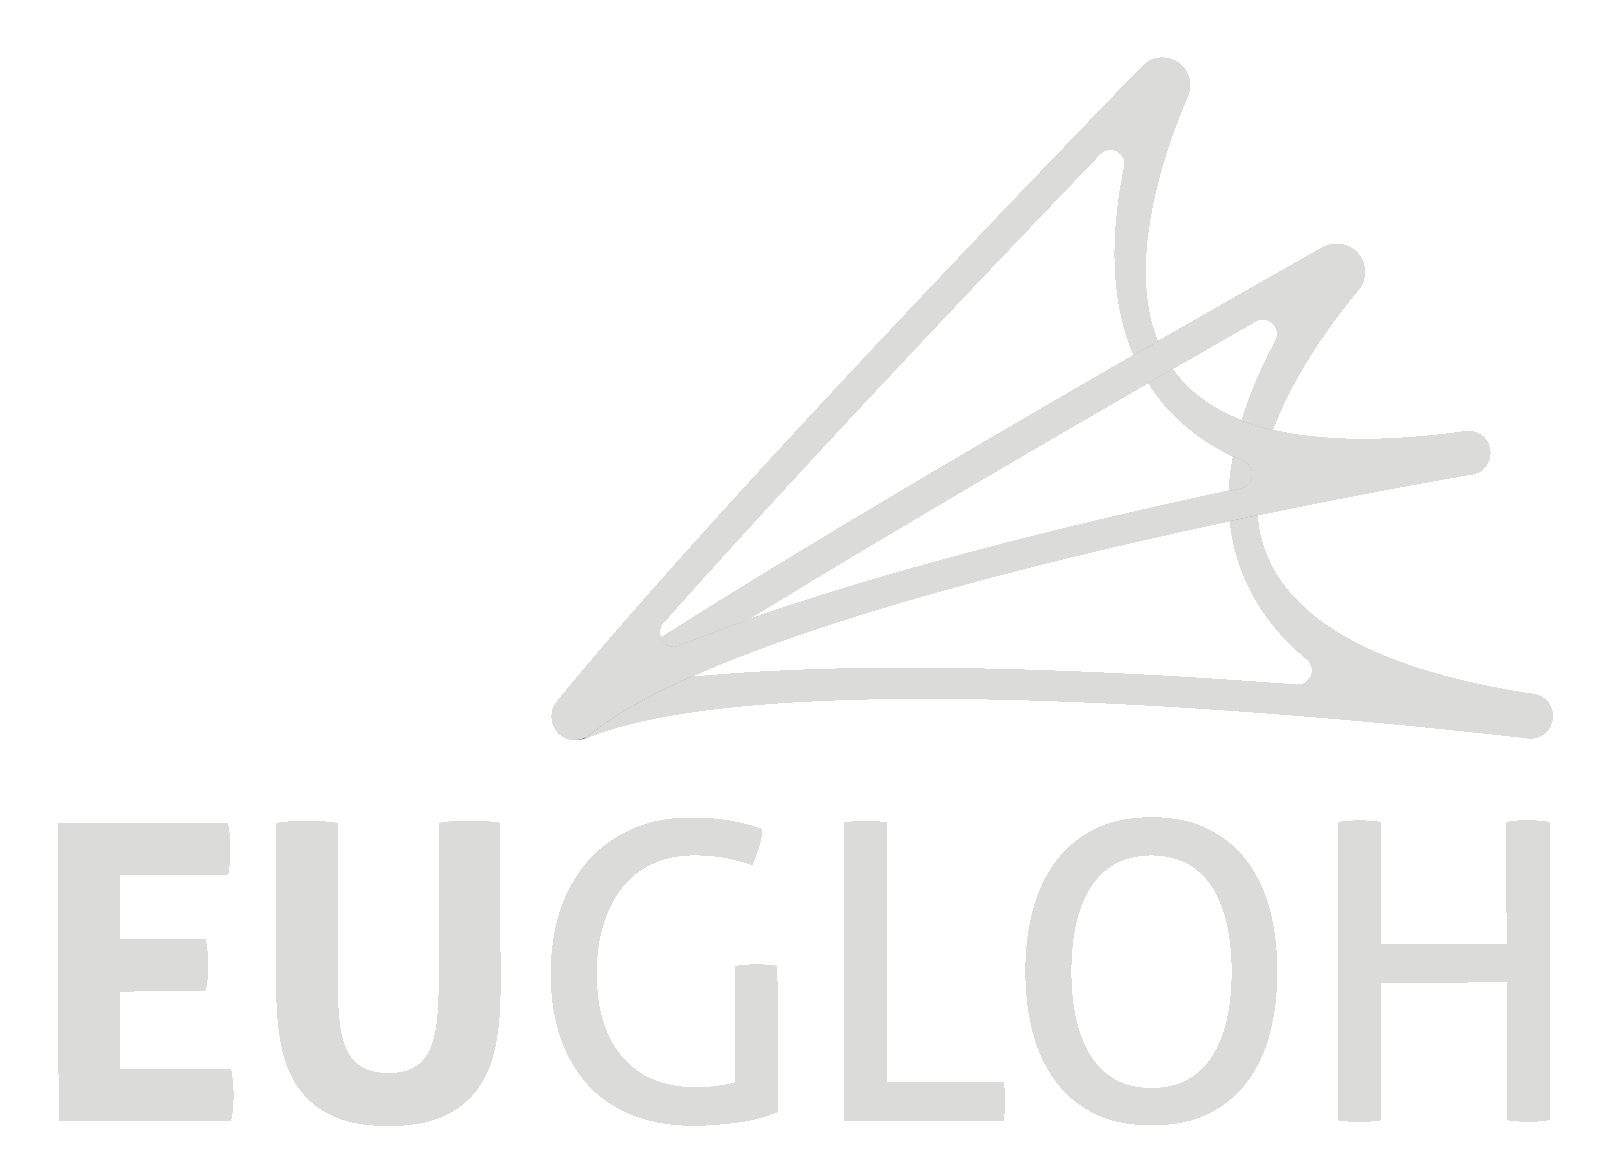 EUGLOH logo